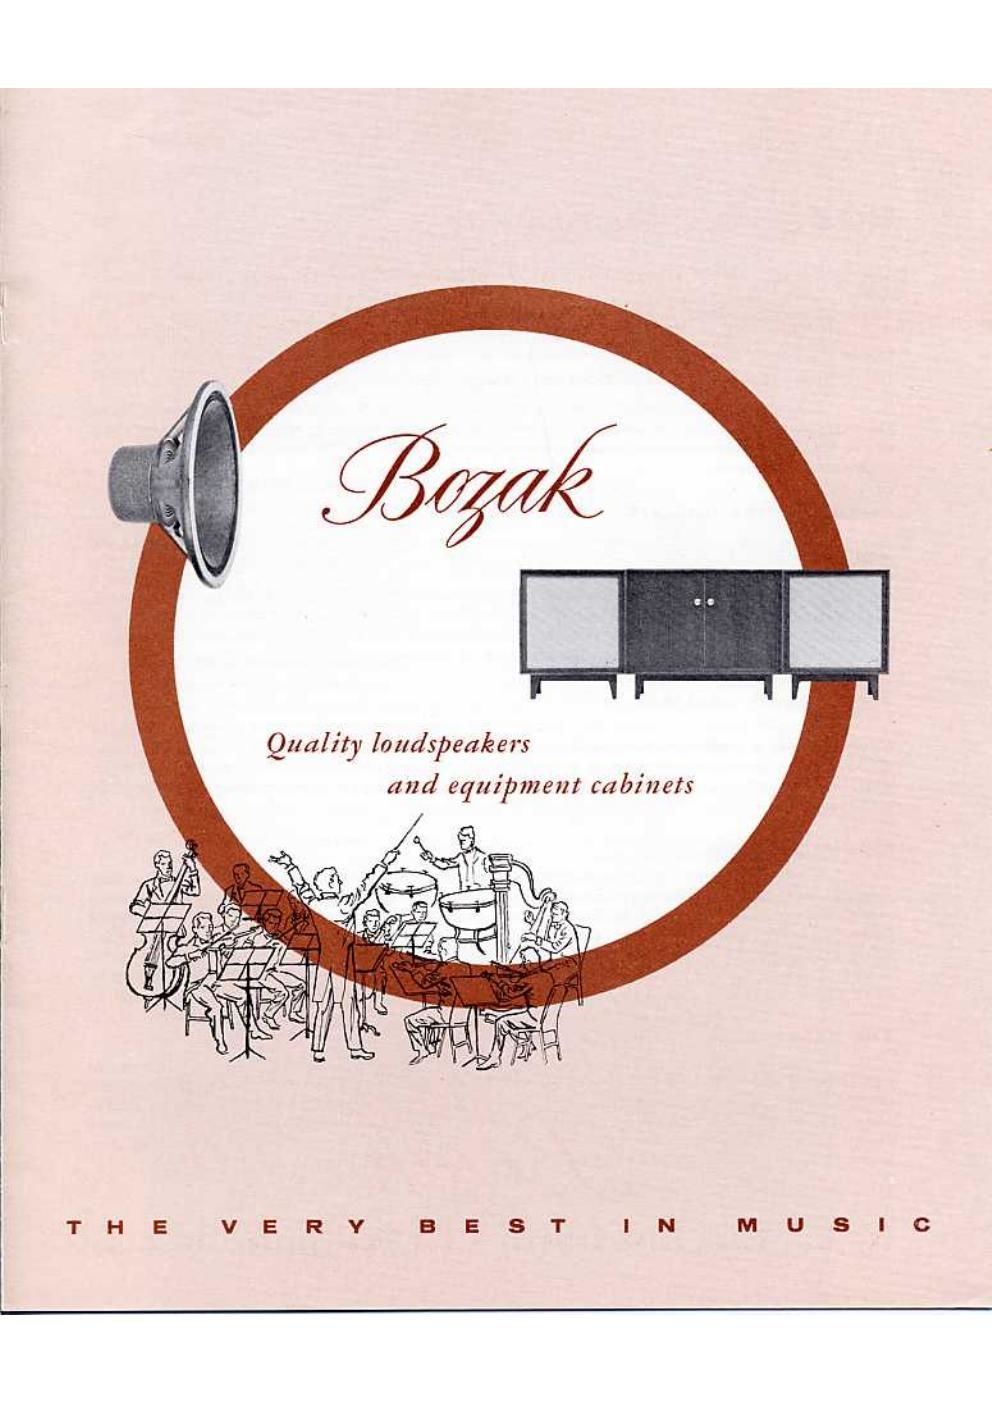 Bozak brochure 1960